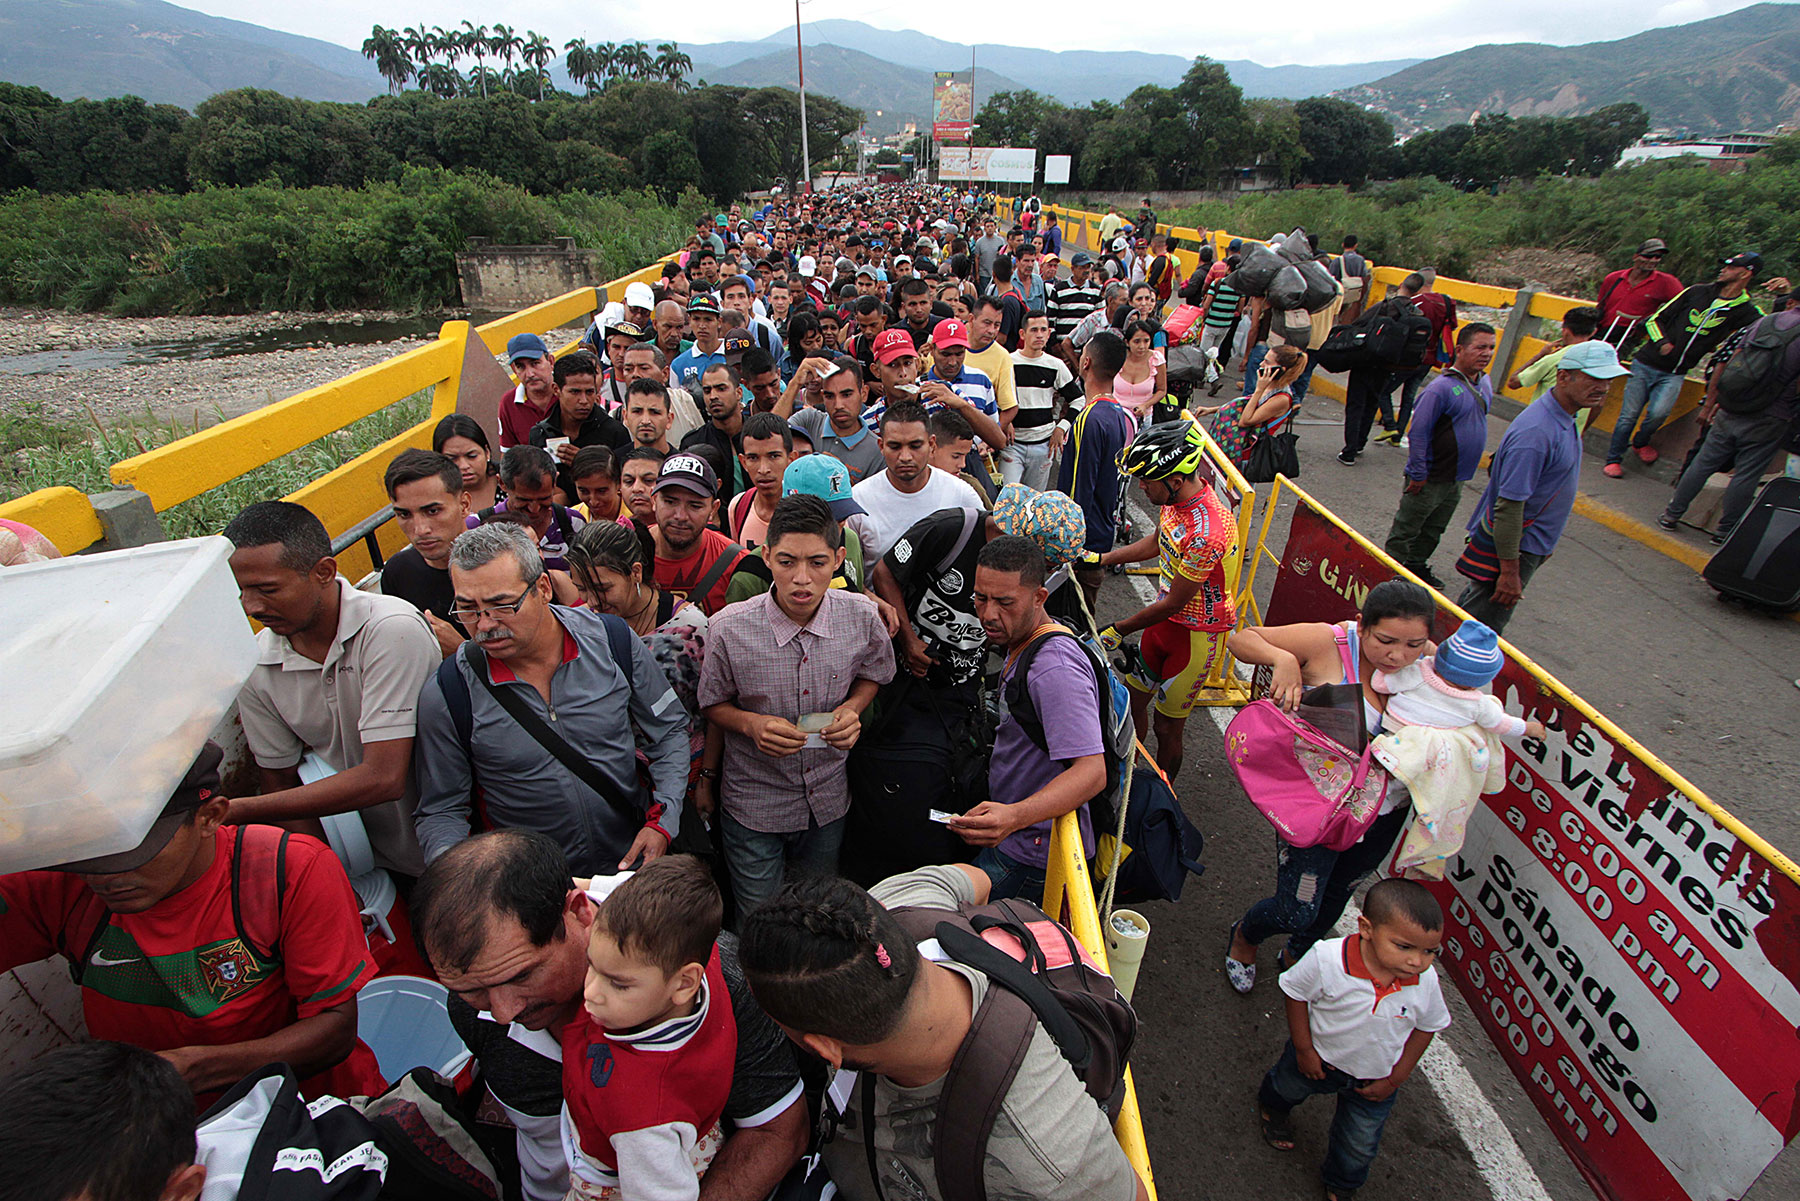 Venezuela-migration_crowd-on-bridge.jpg (1800×1201)